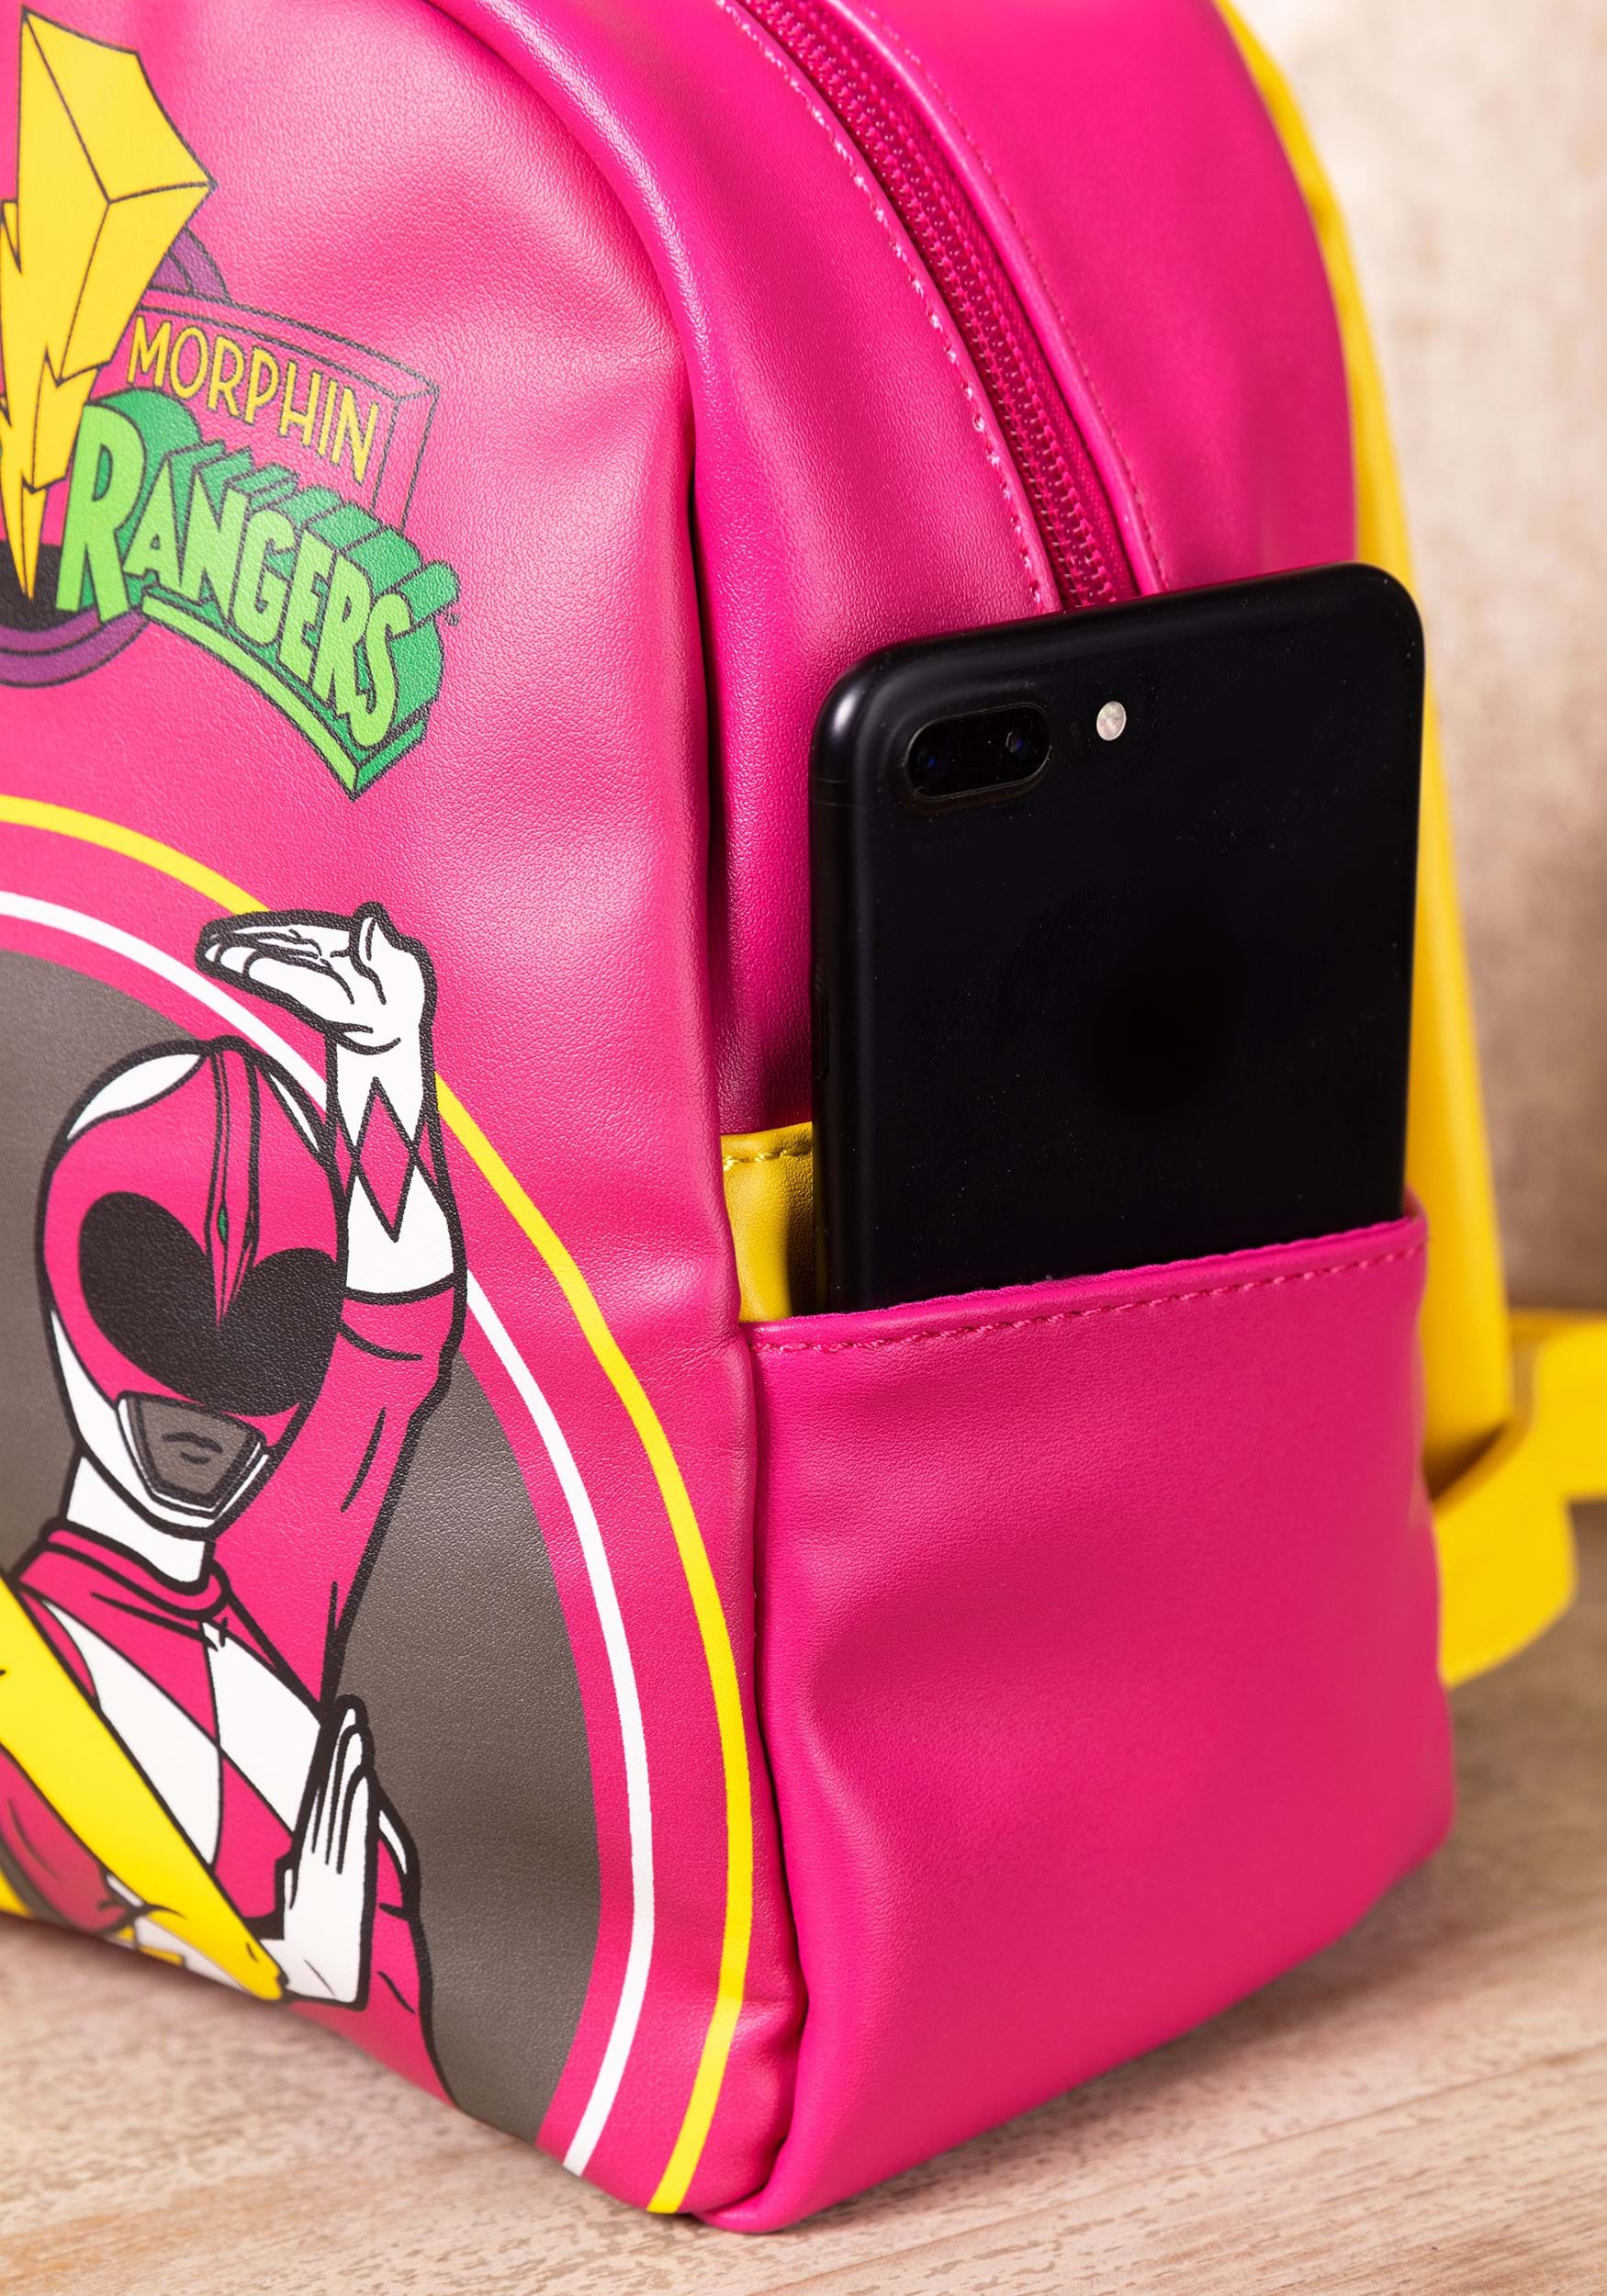 Disney Store Monsters Inc Pink Backpack